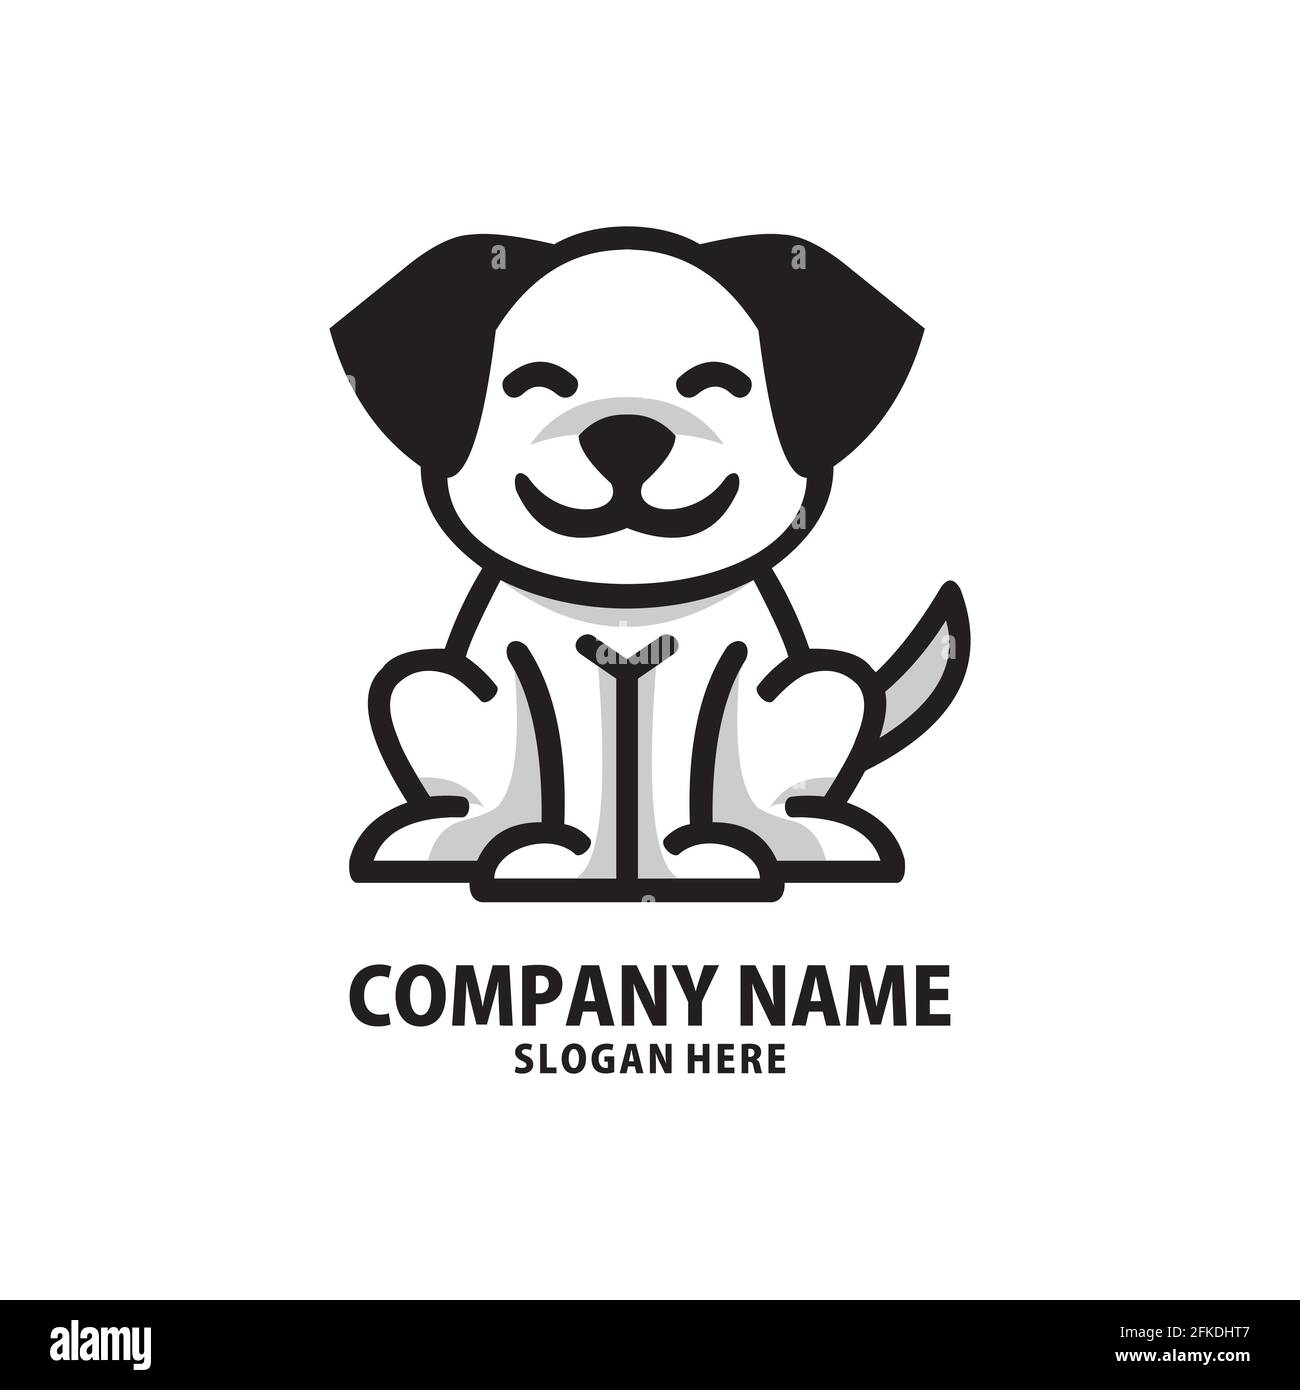 cute dog logo vector animal pet Stock Photo - Alamy